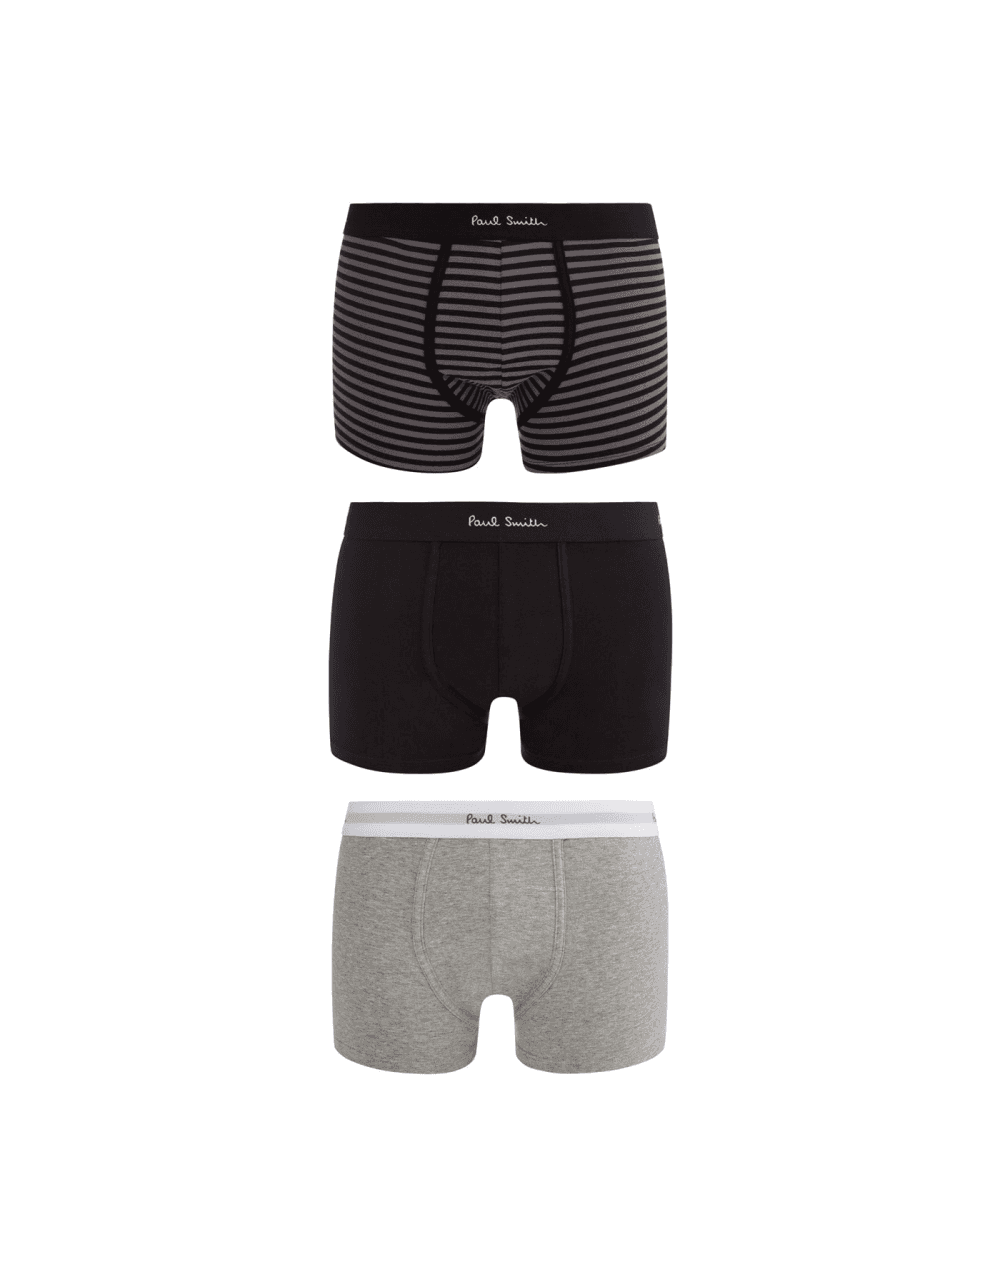 Paul Smith 3 Pack Underwear Col: Black/grey Stripe/grey With White Ban